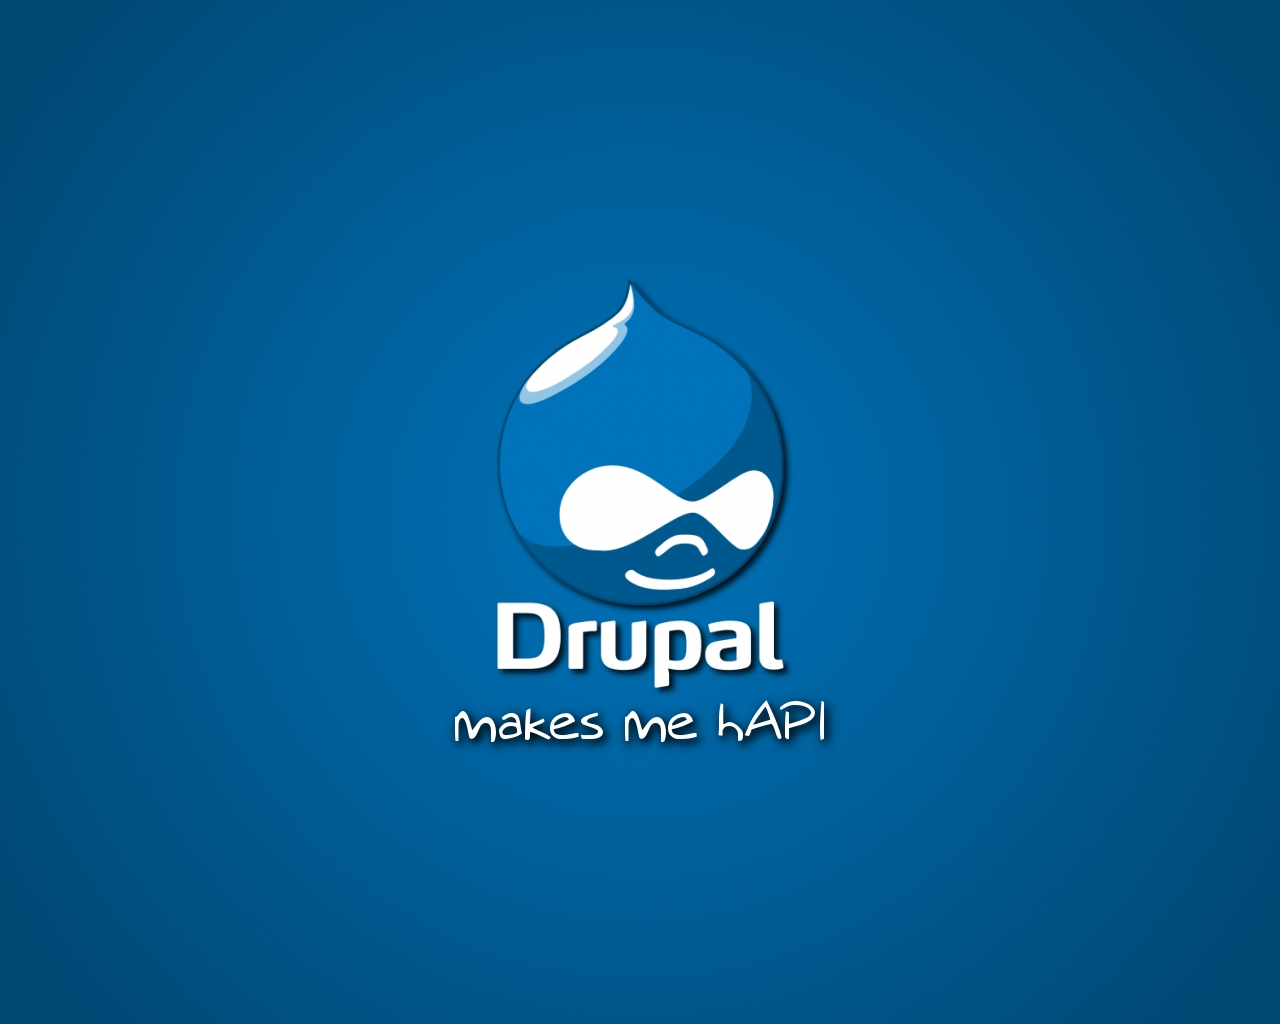 Drupal makes me hAPI